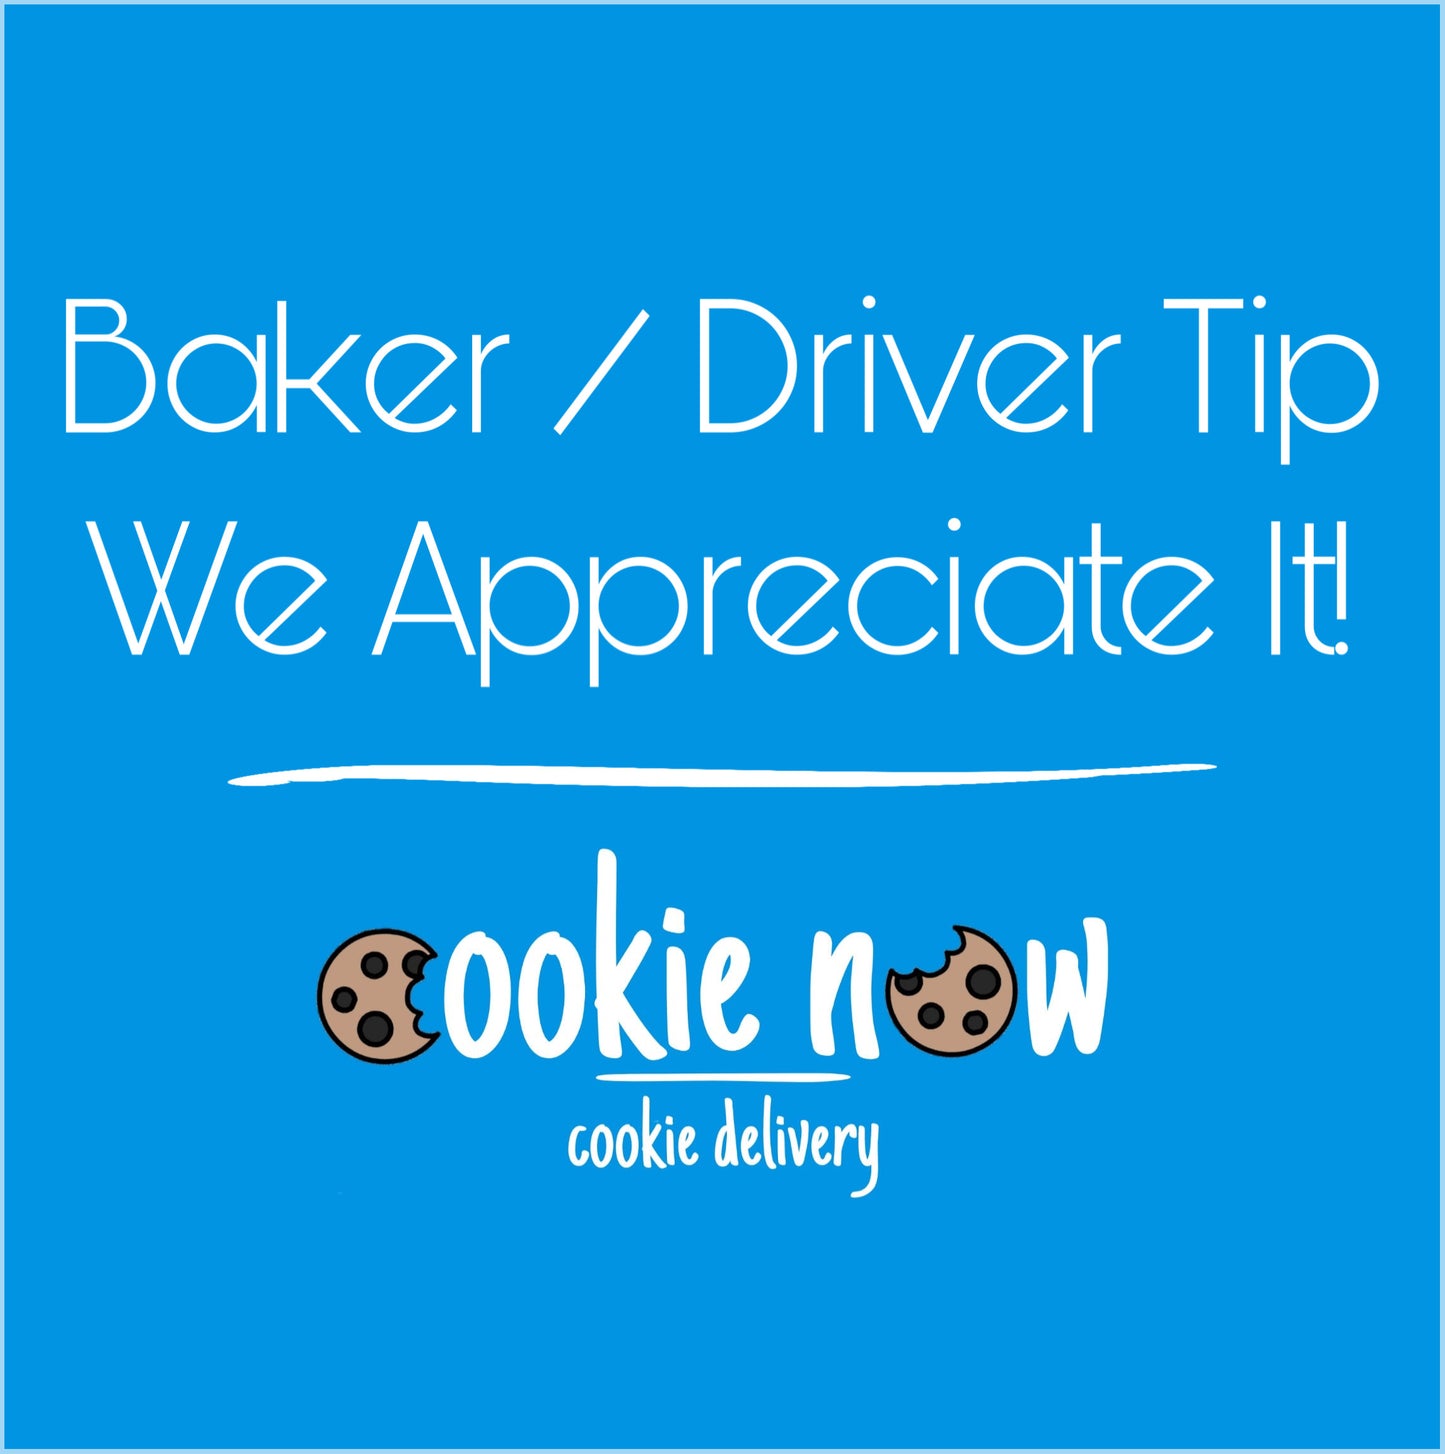 Baker / Driver Tip